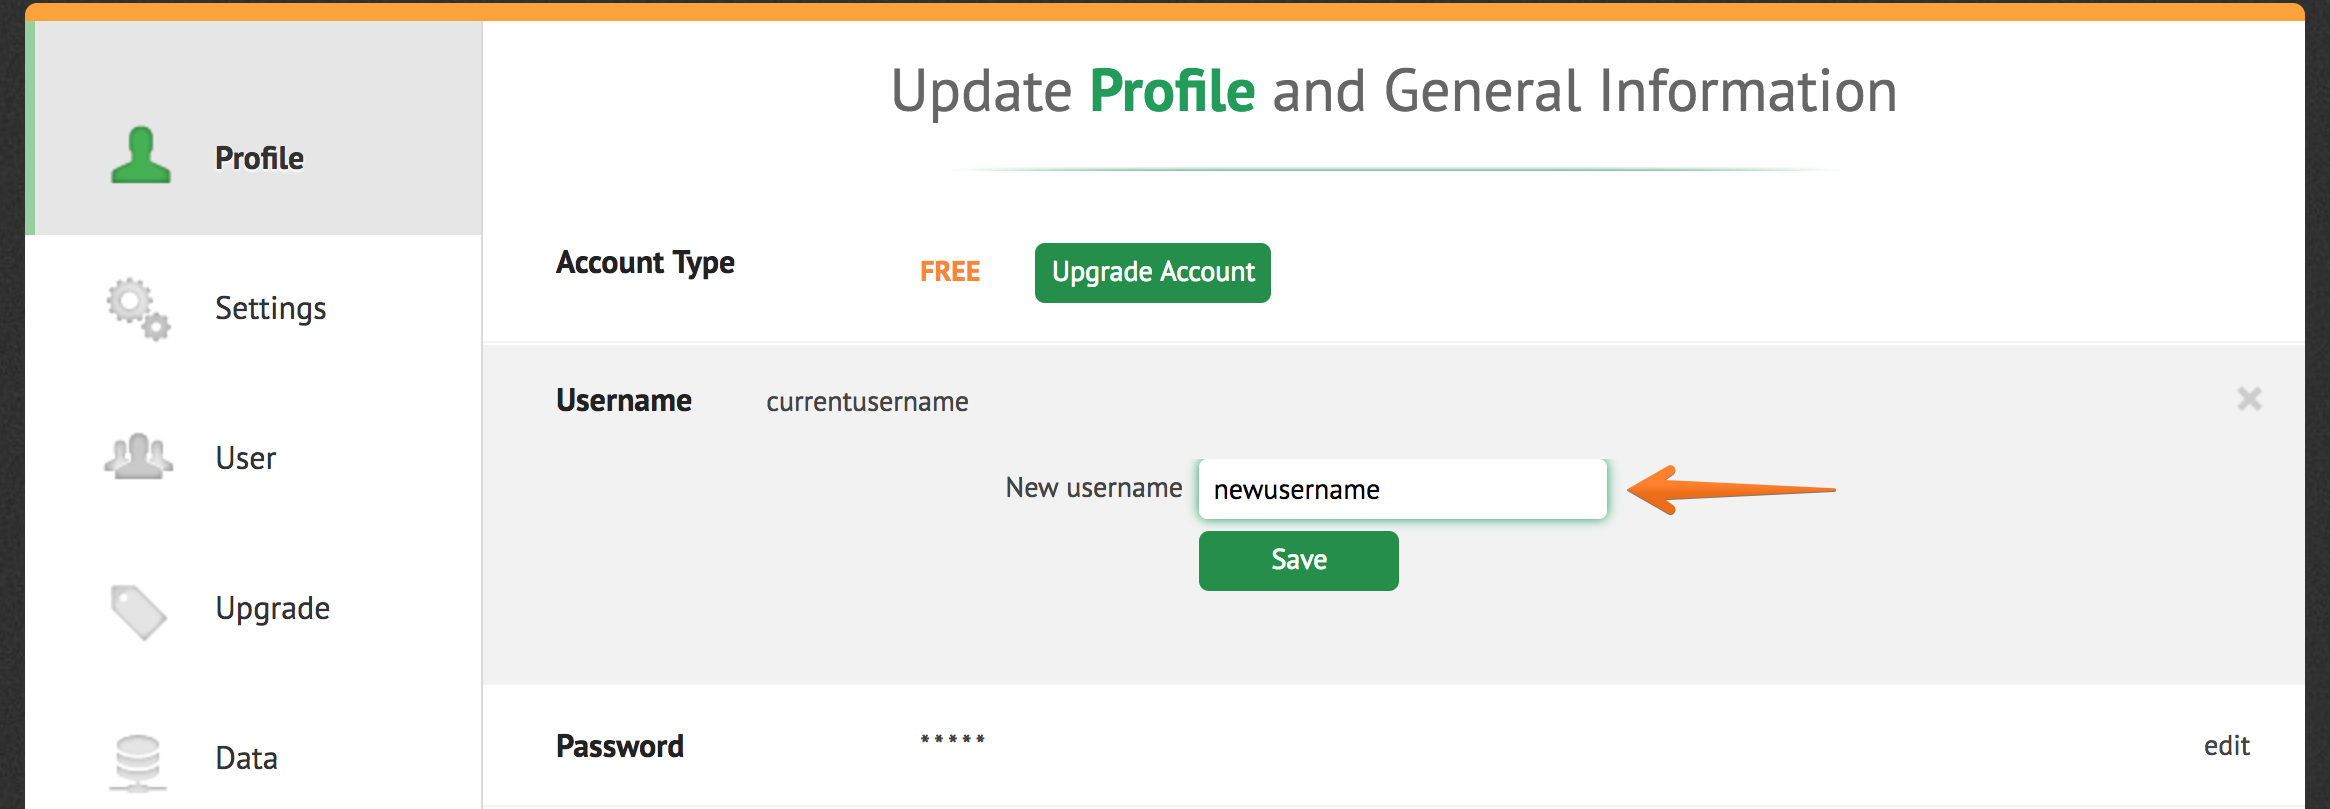 How do I update my username? Image 1 Screenshot 20